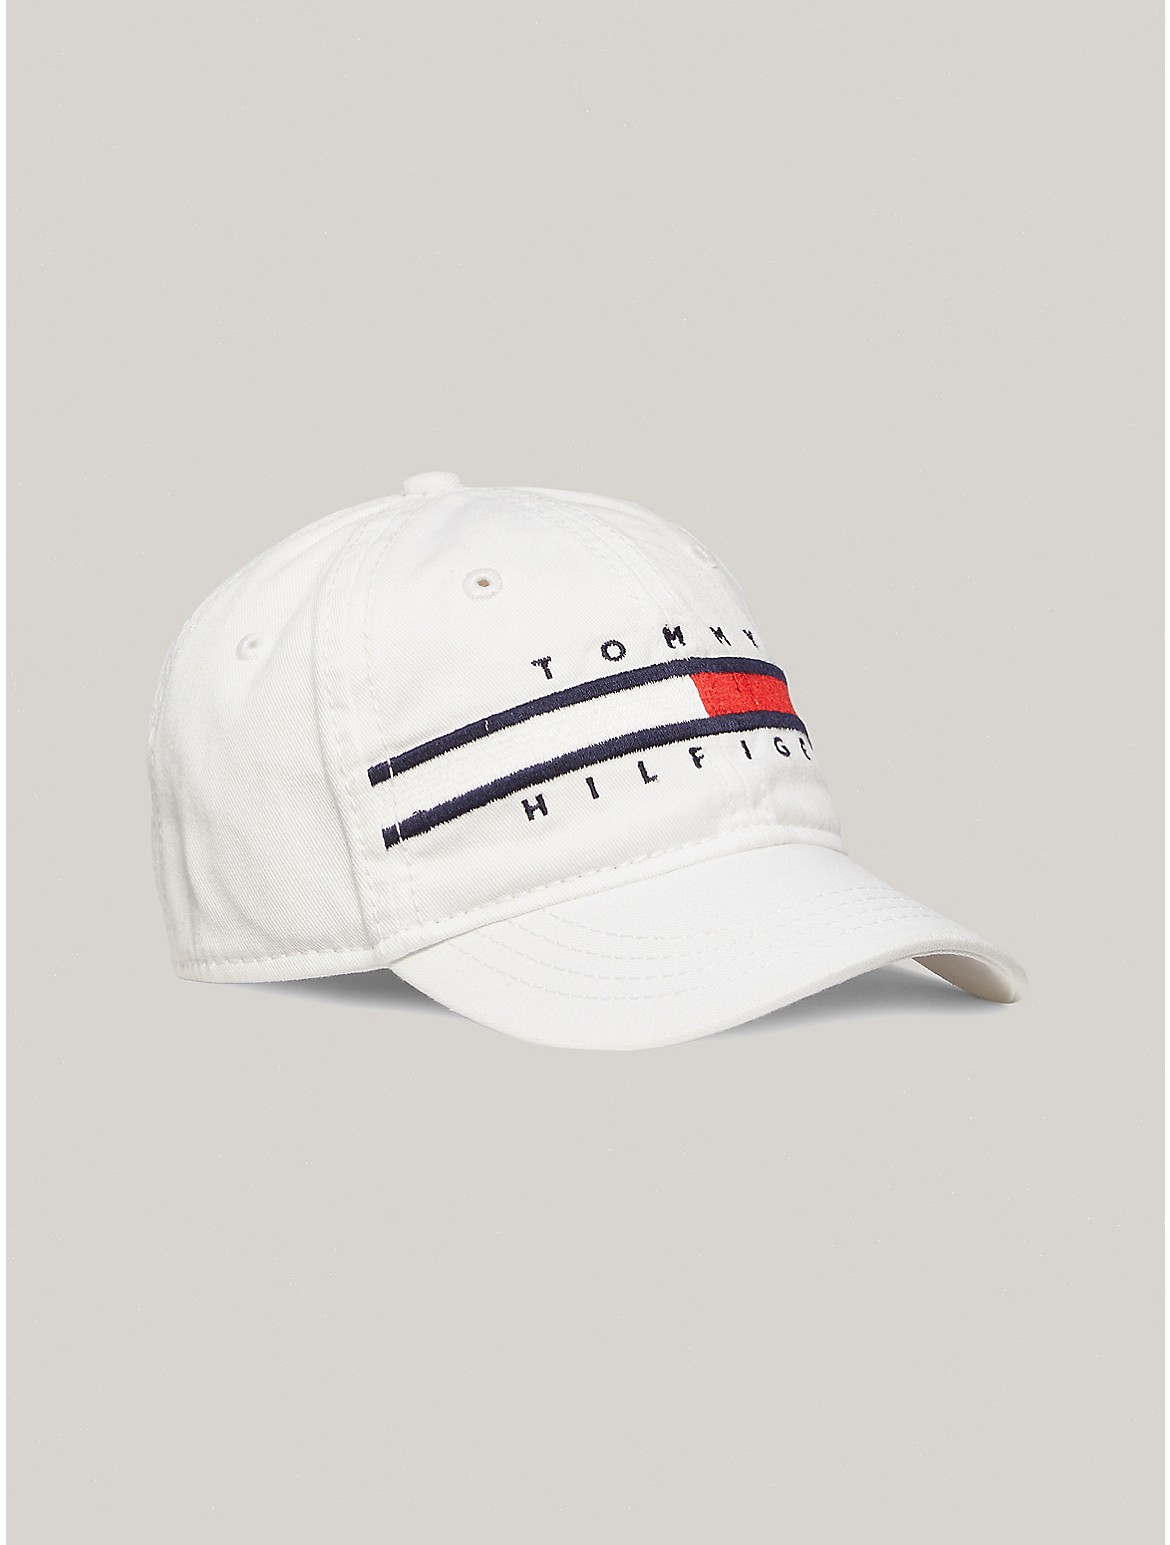 Tommy Hilfiger Kids' Flag Stripe Logo Baseball Cap - White - M